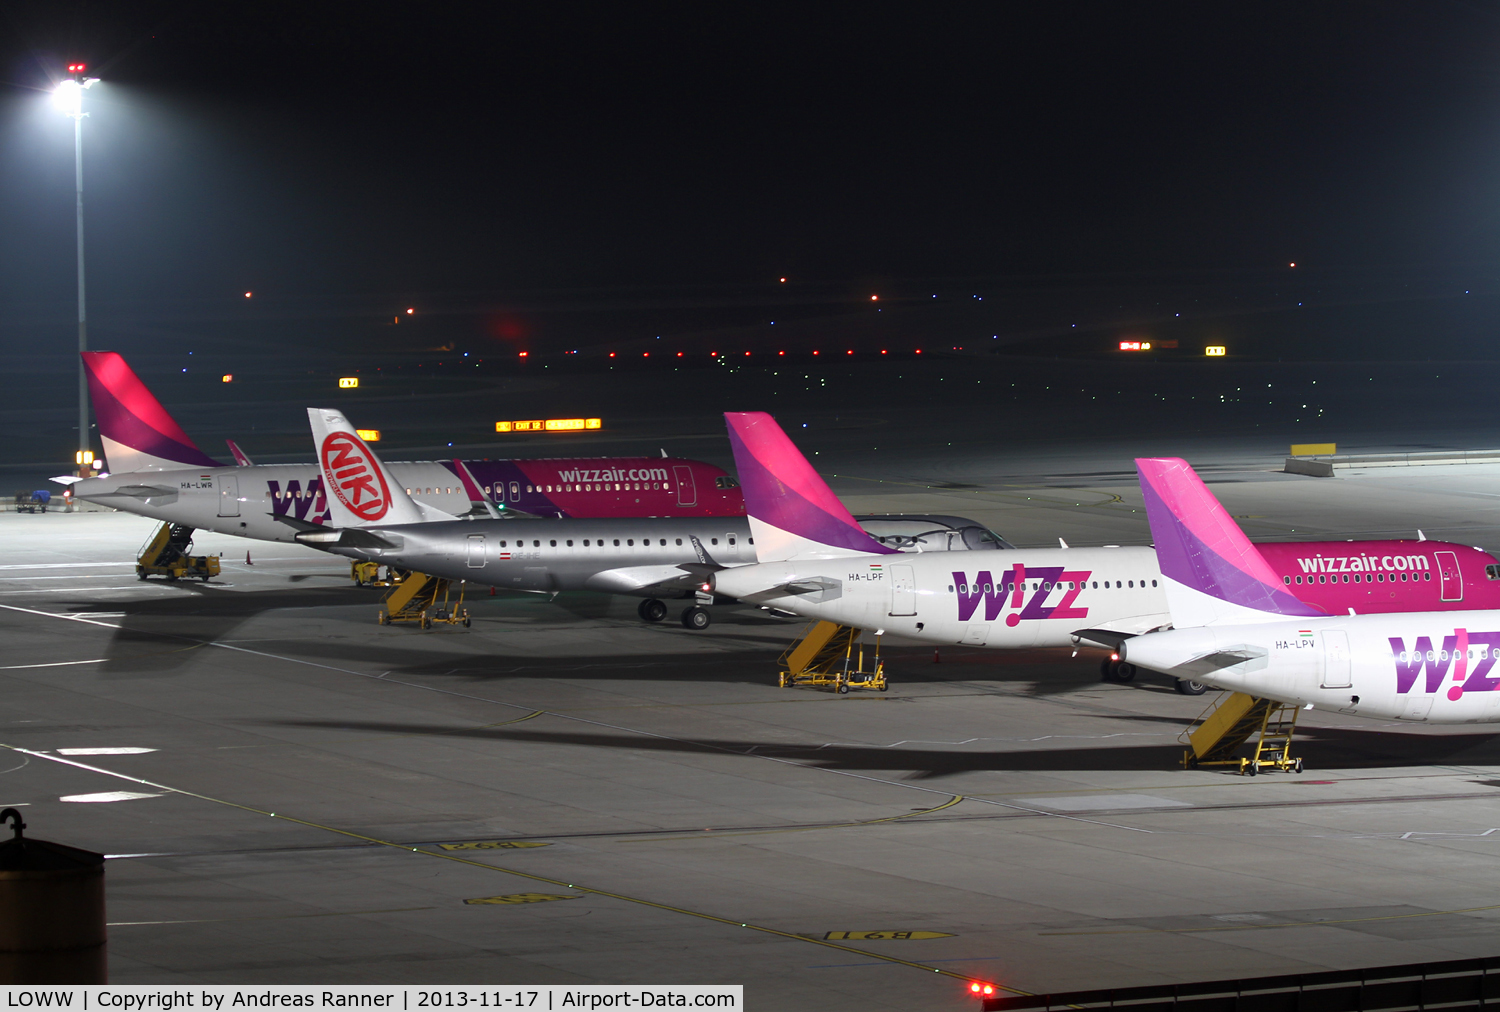 Vienna International Airport, Vienna Austria (LOWW) - diverted Wizz Air aircrafts